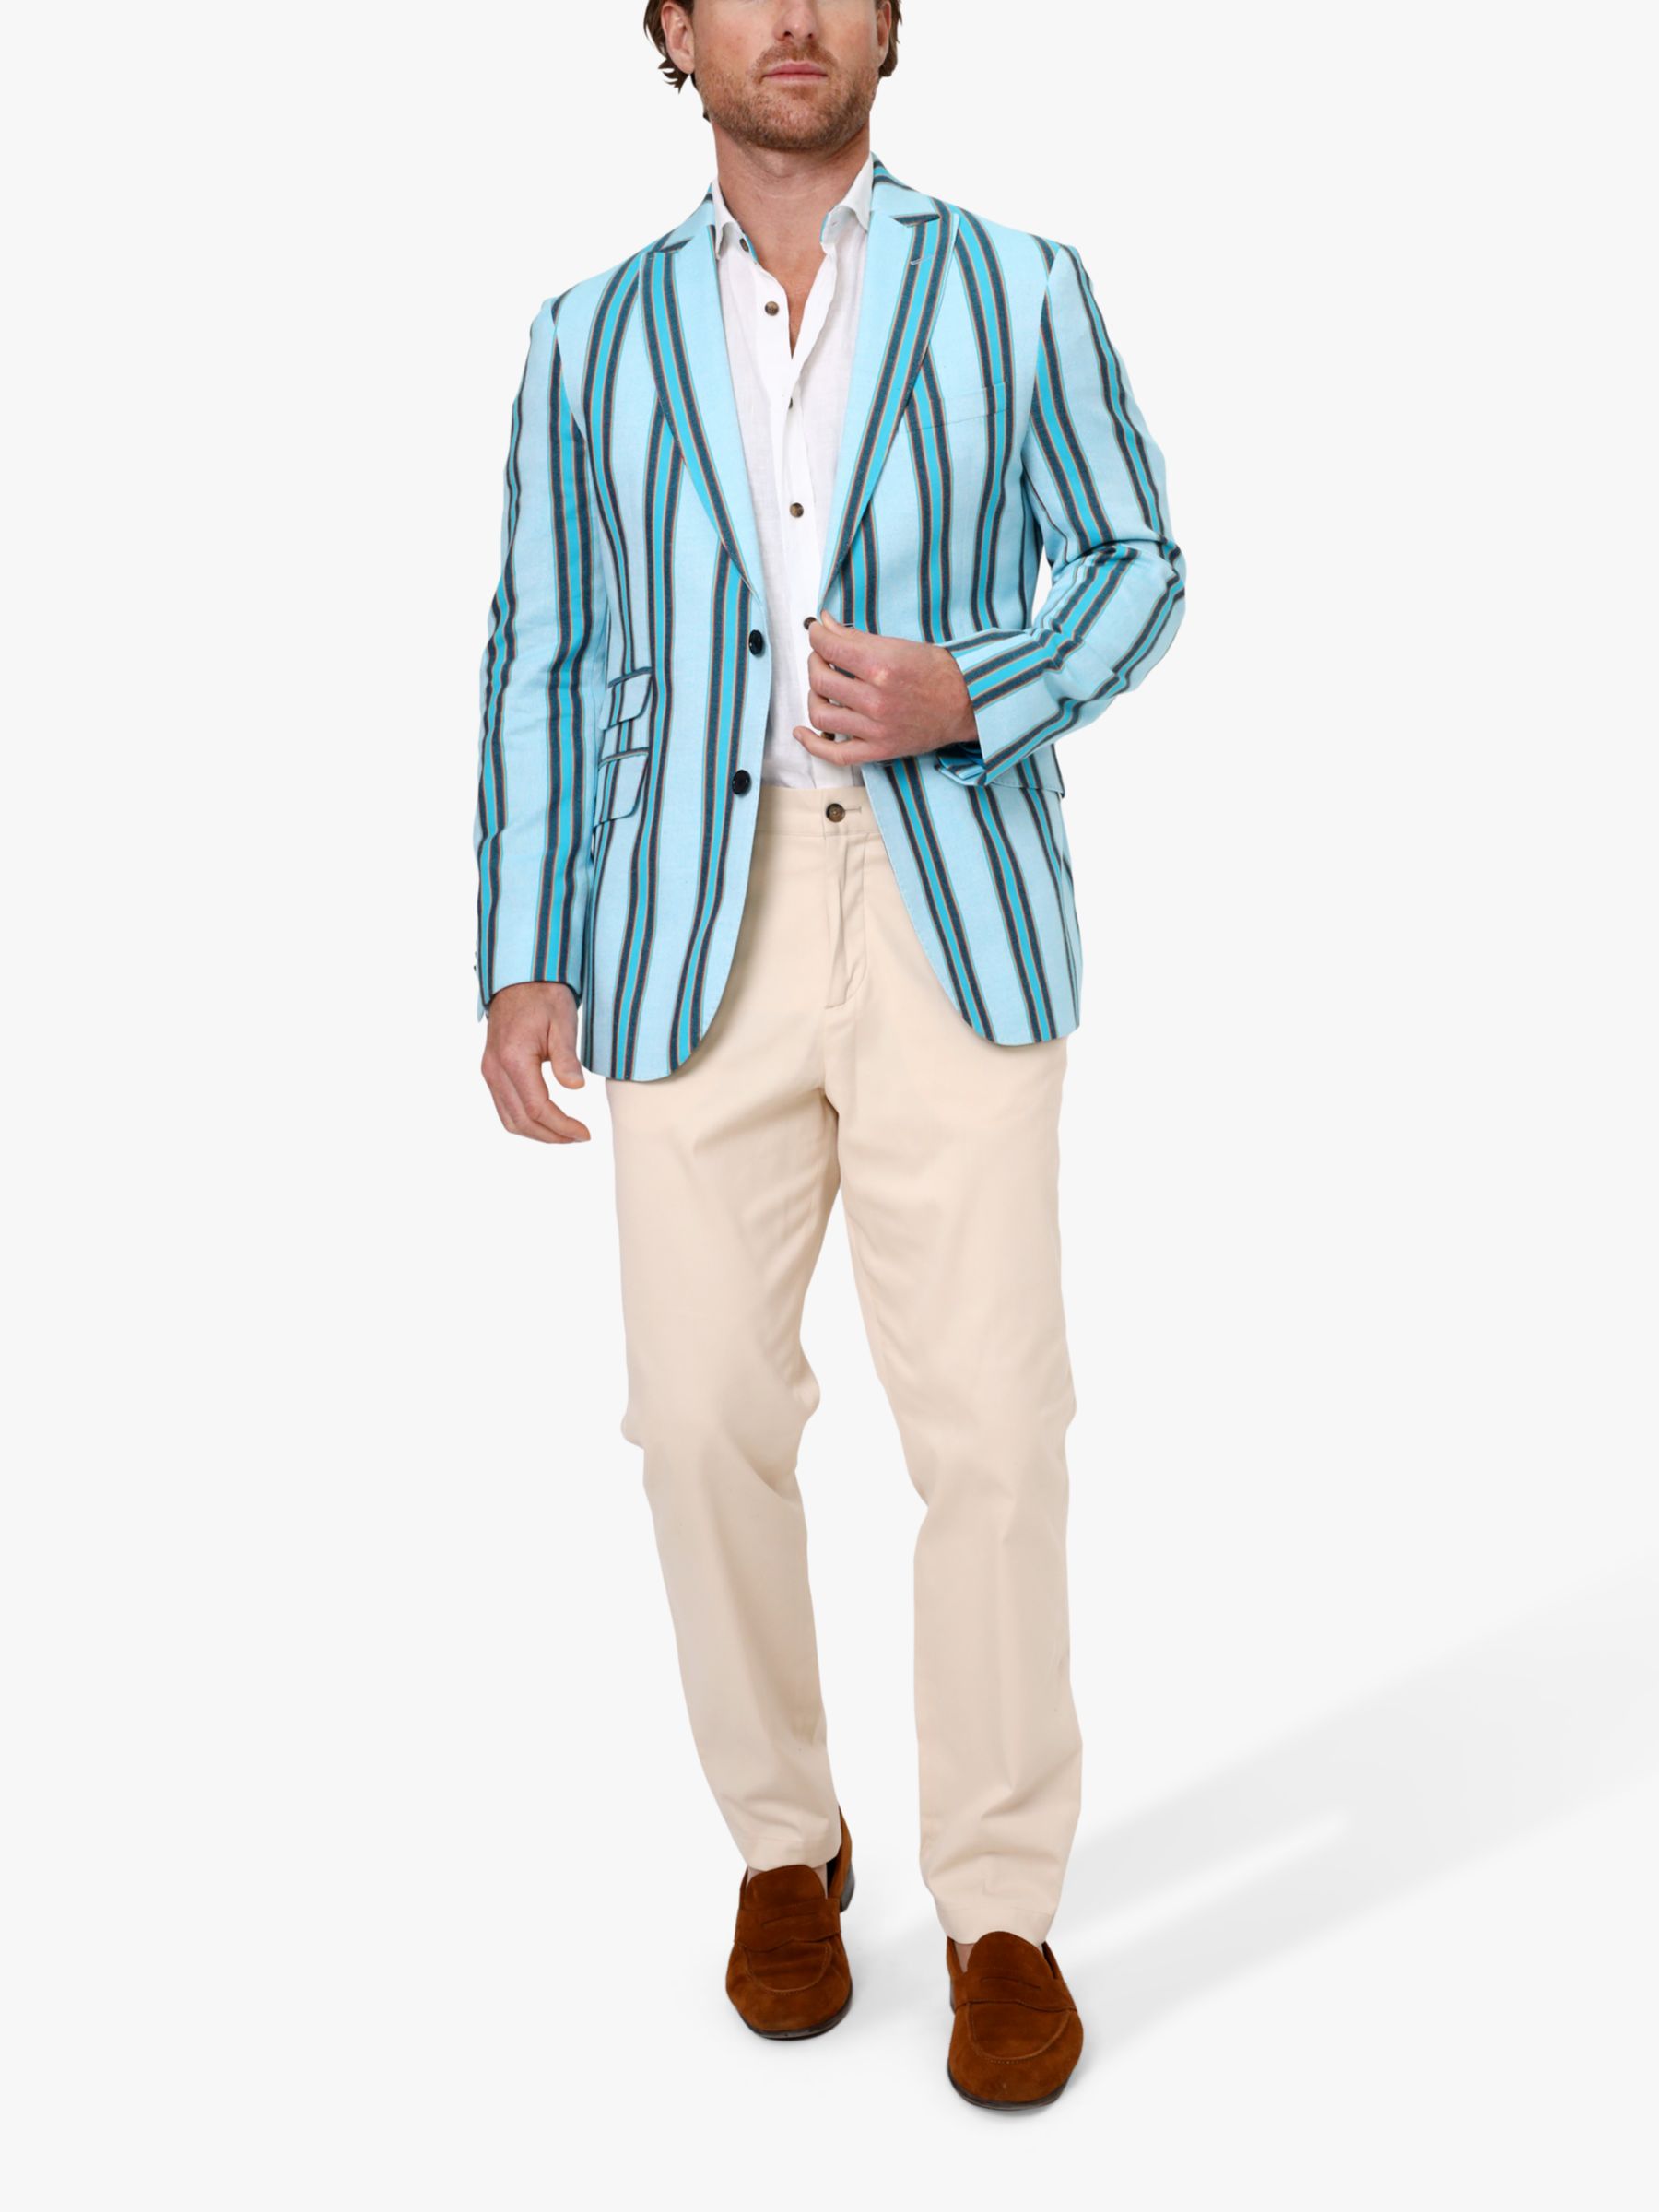 Buy KOY Kikoy Striped Blazer, Turquoise Online at johnlewis.com